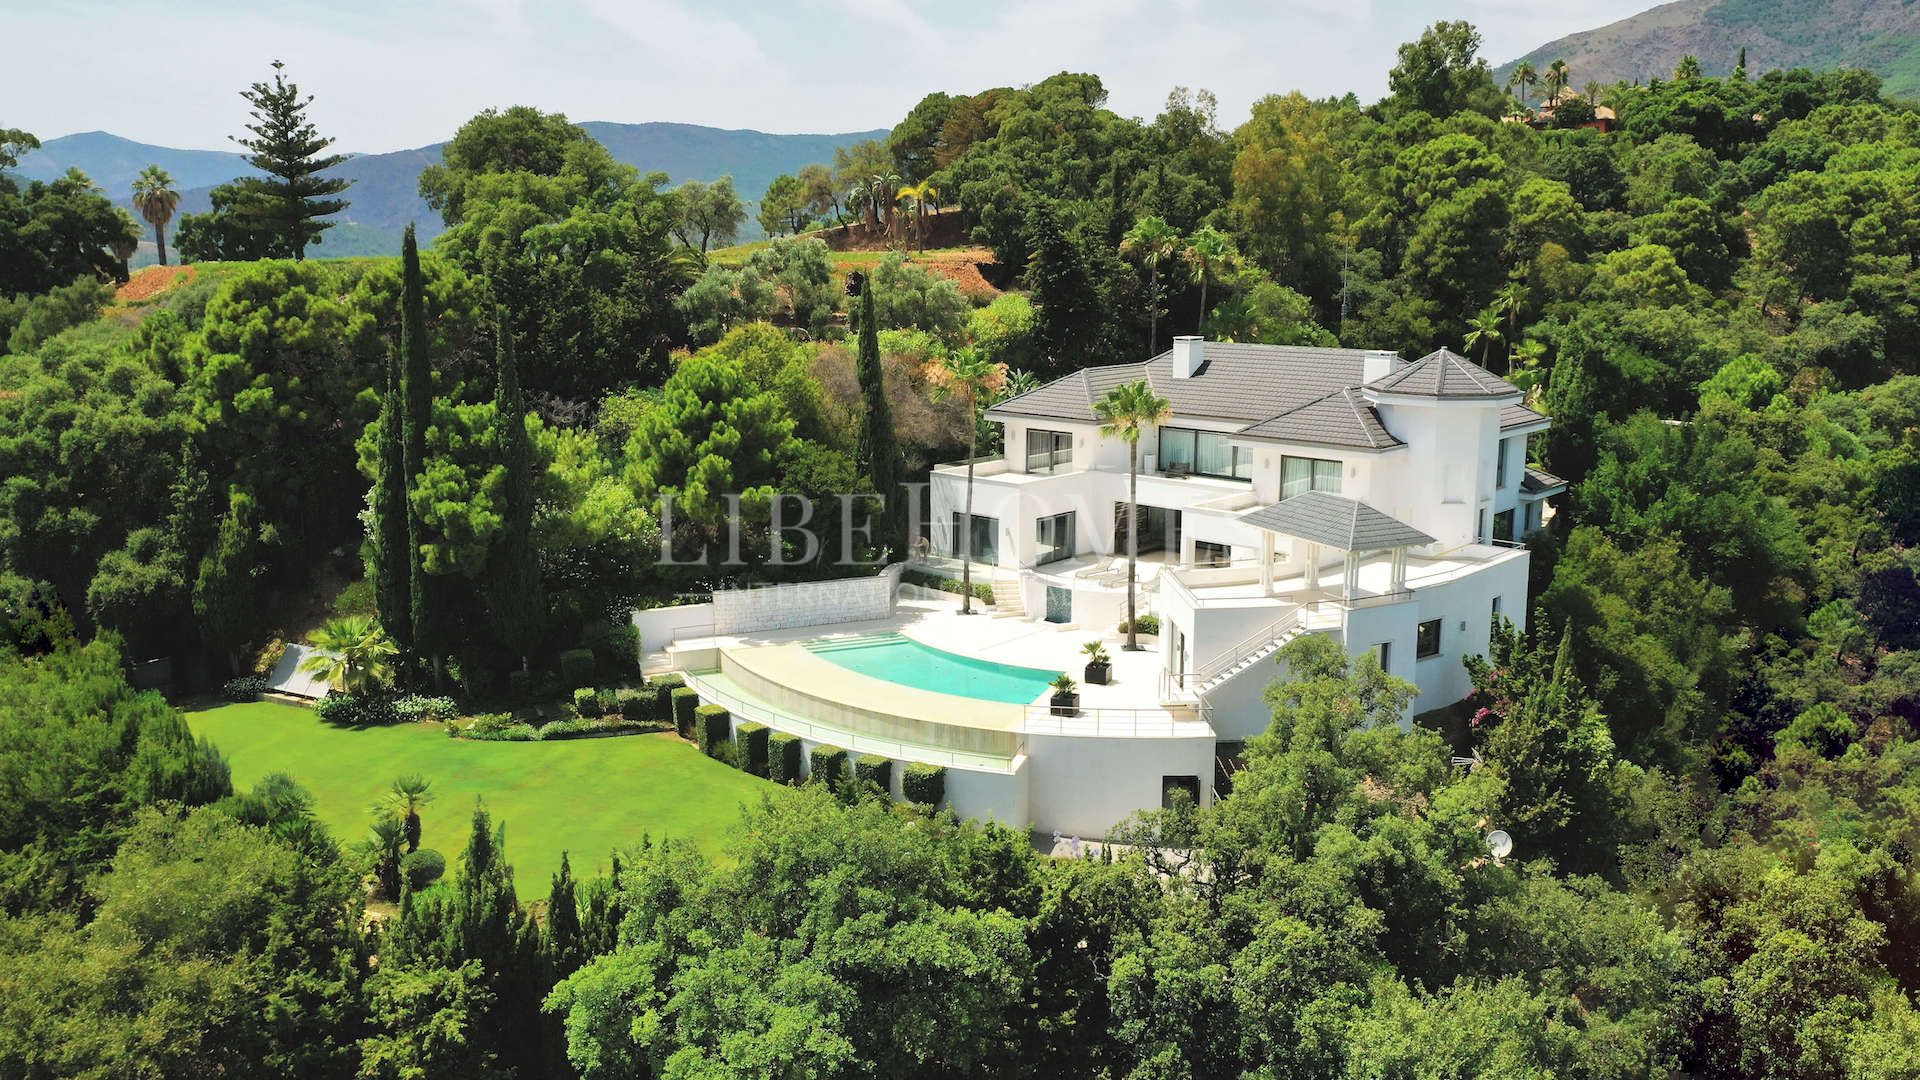 Designer luxury villa with amazing views in La Zagaleta, Benahavis